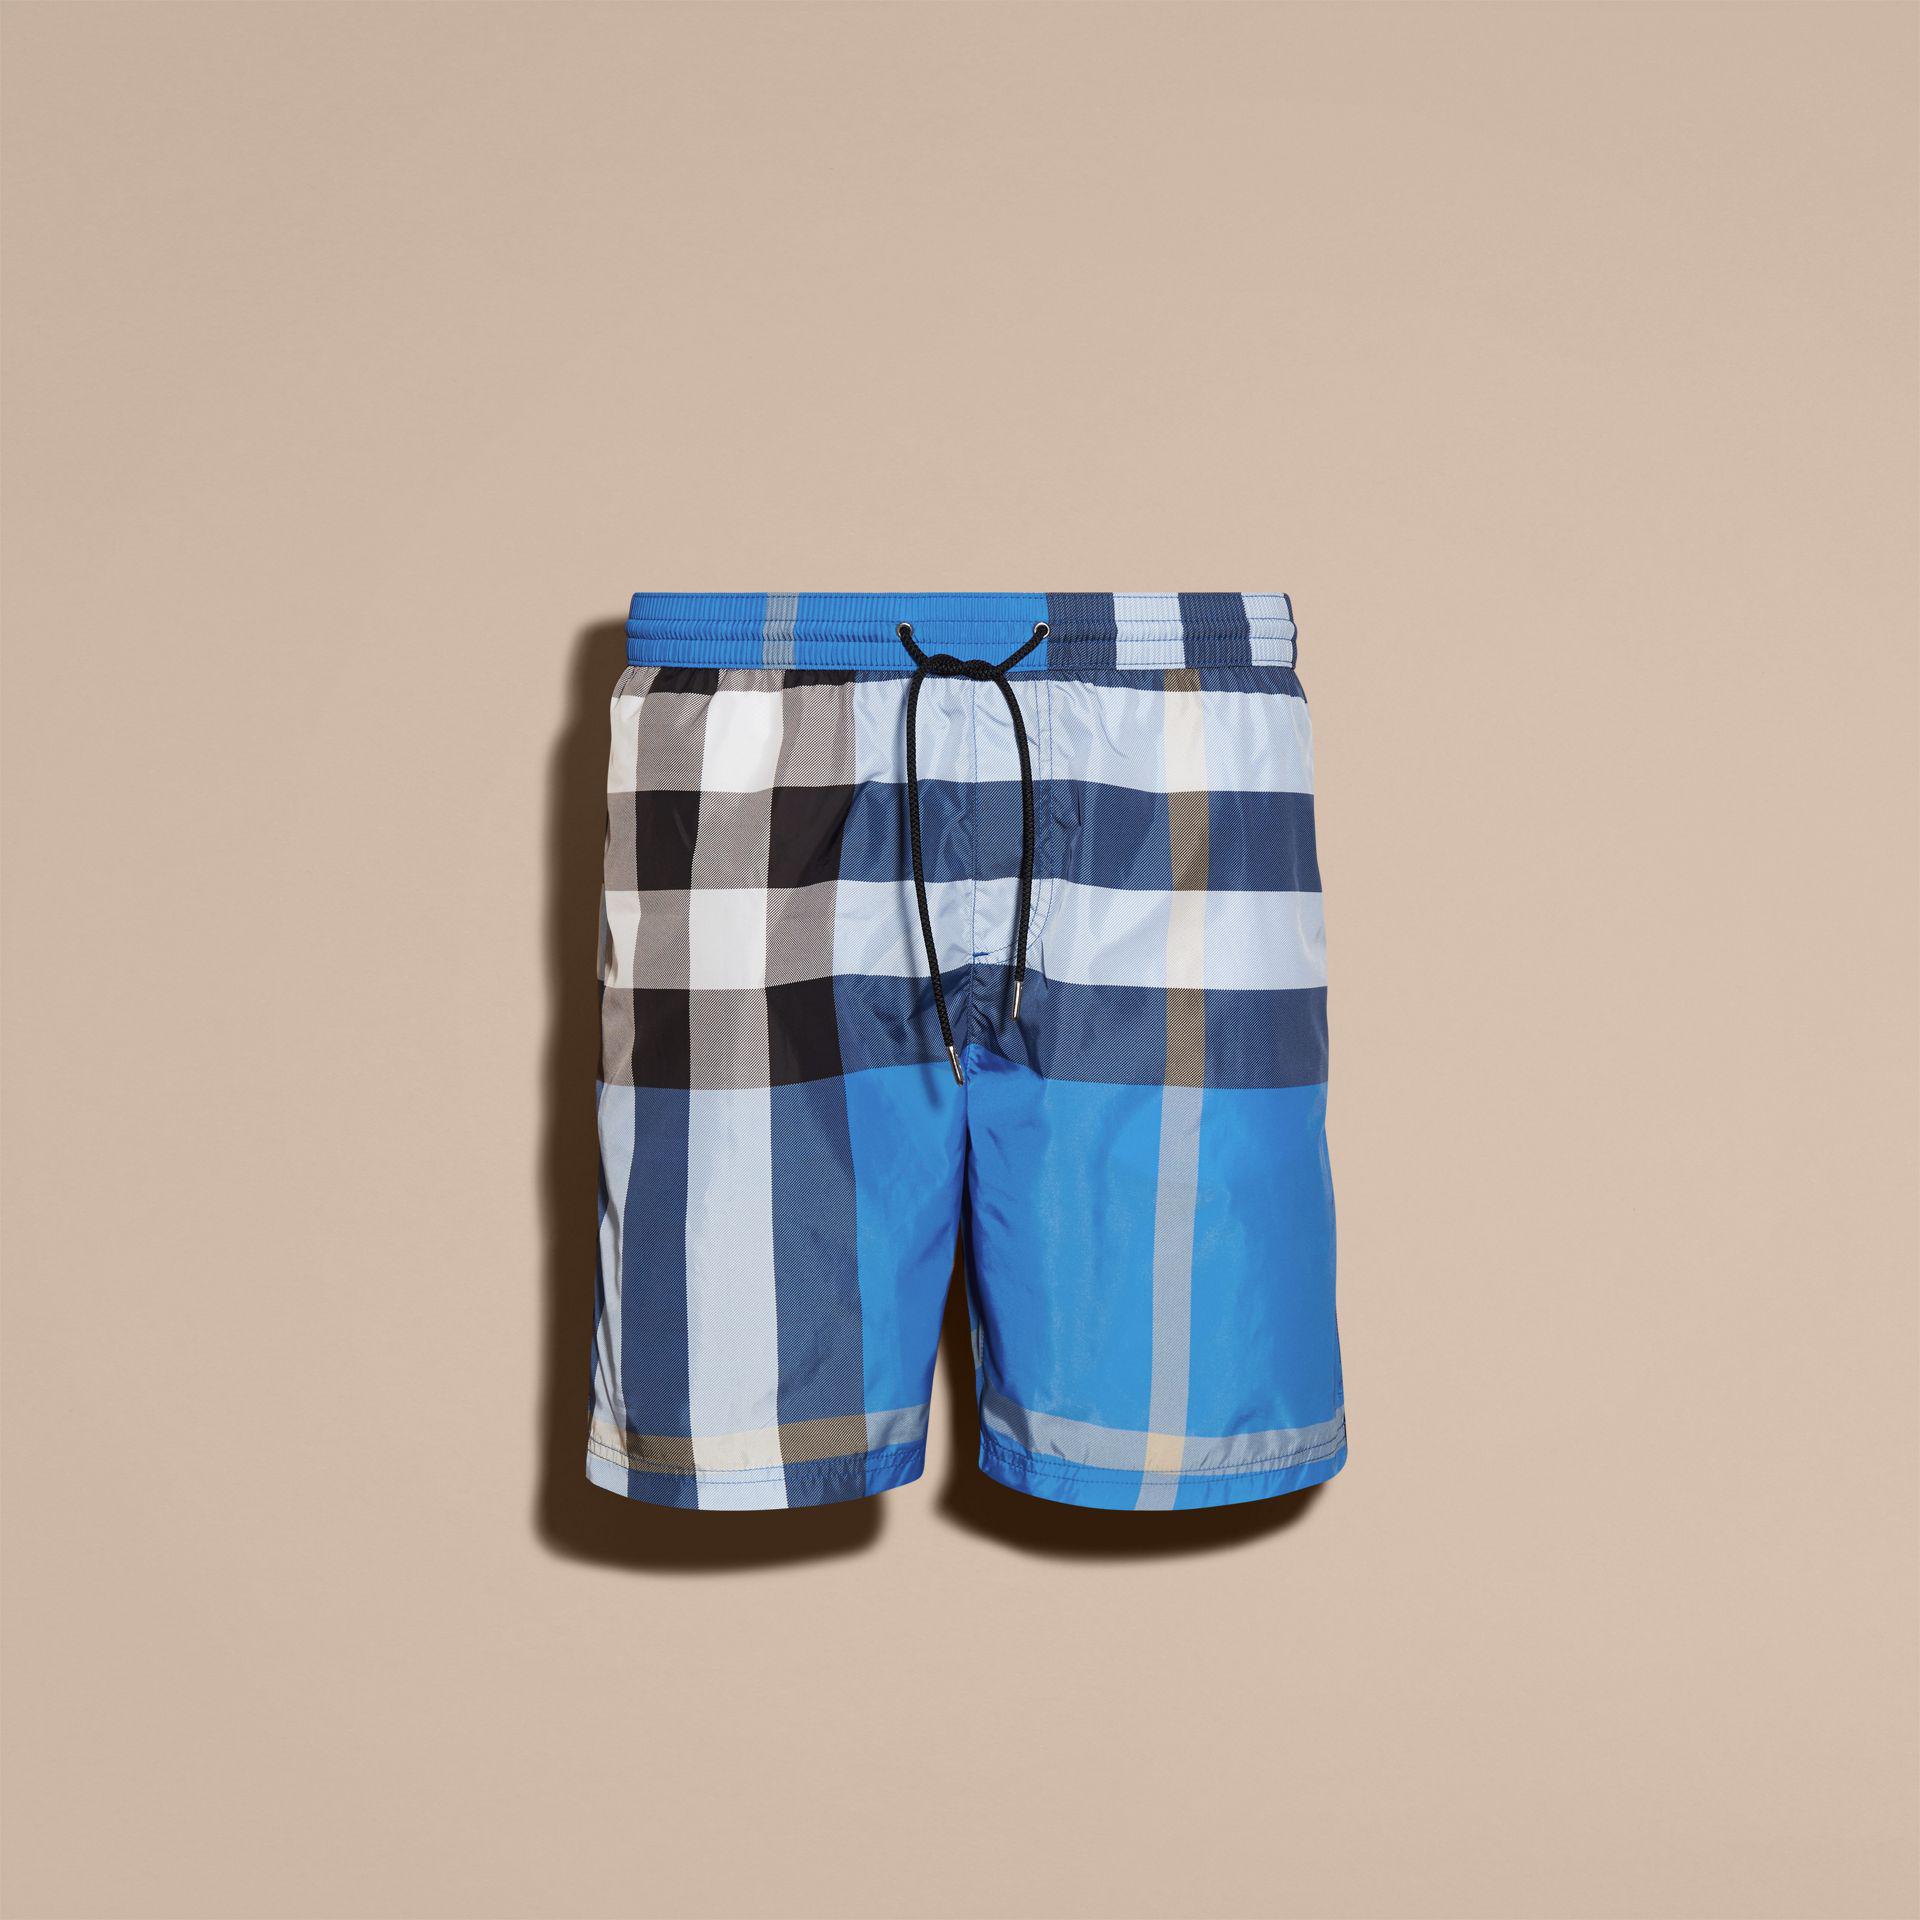 Burberry Check Swim Shorts Cerulean Blue for Men - Lyst